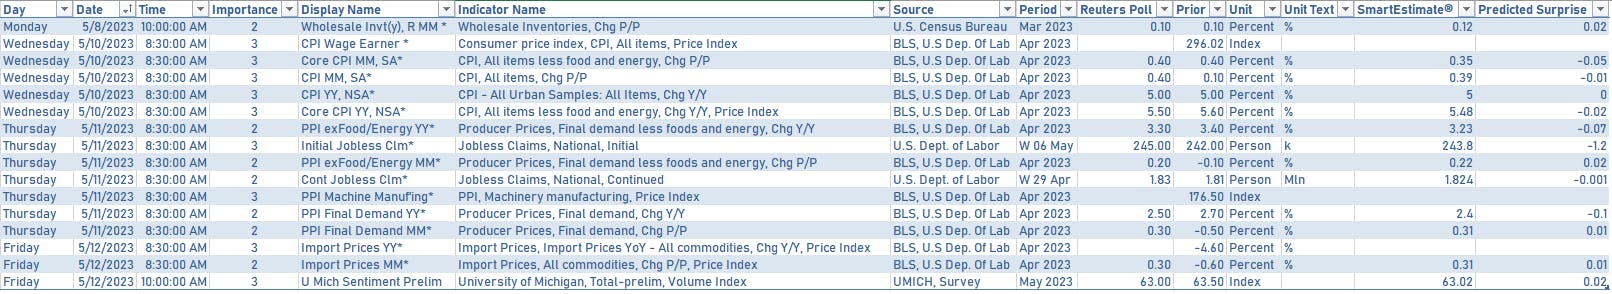 US Economic data next week | Sources: phipost.com, Refinitiv data